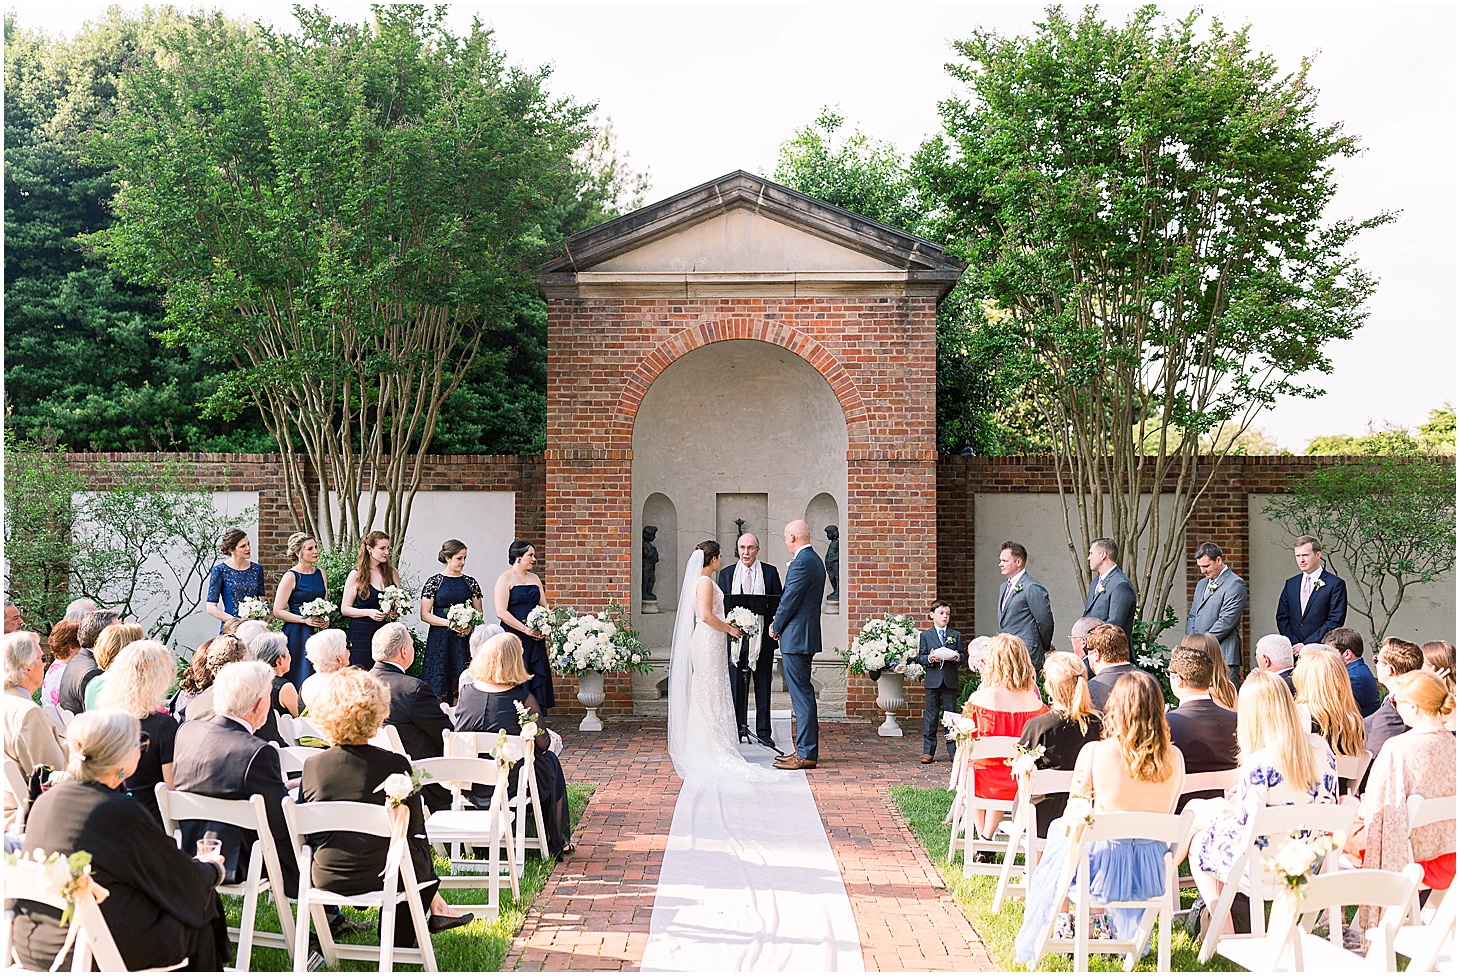 Spring Garden Wedding Ceremony, Romantic Spring Wedding at Dumbarton House Gardens, Sarah Bradshaw Photography, DC Wedding Photographer